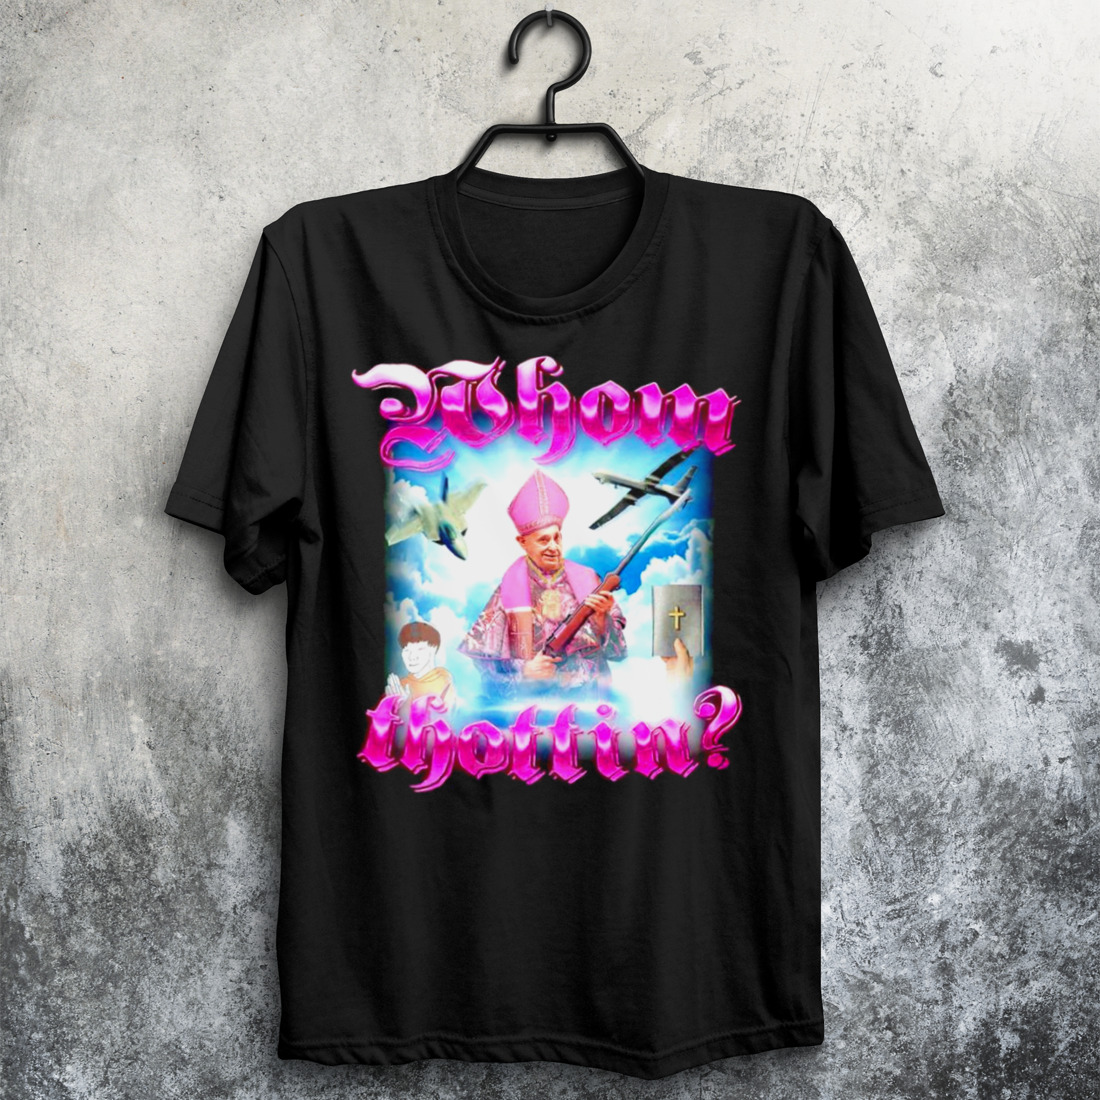 Whom Thottin T-shirt